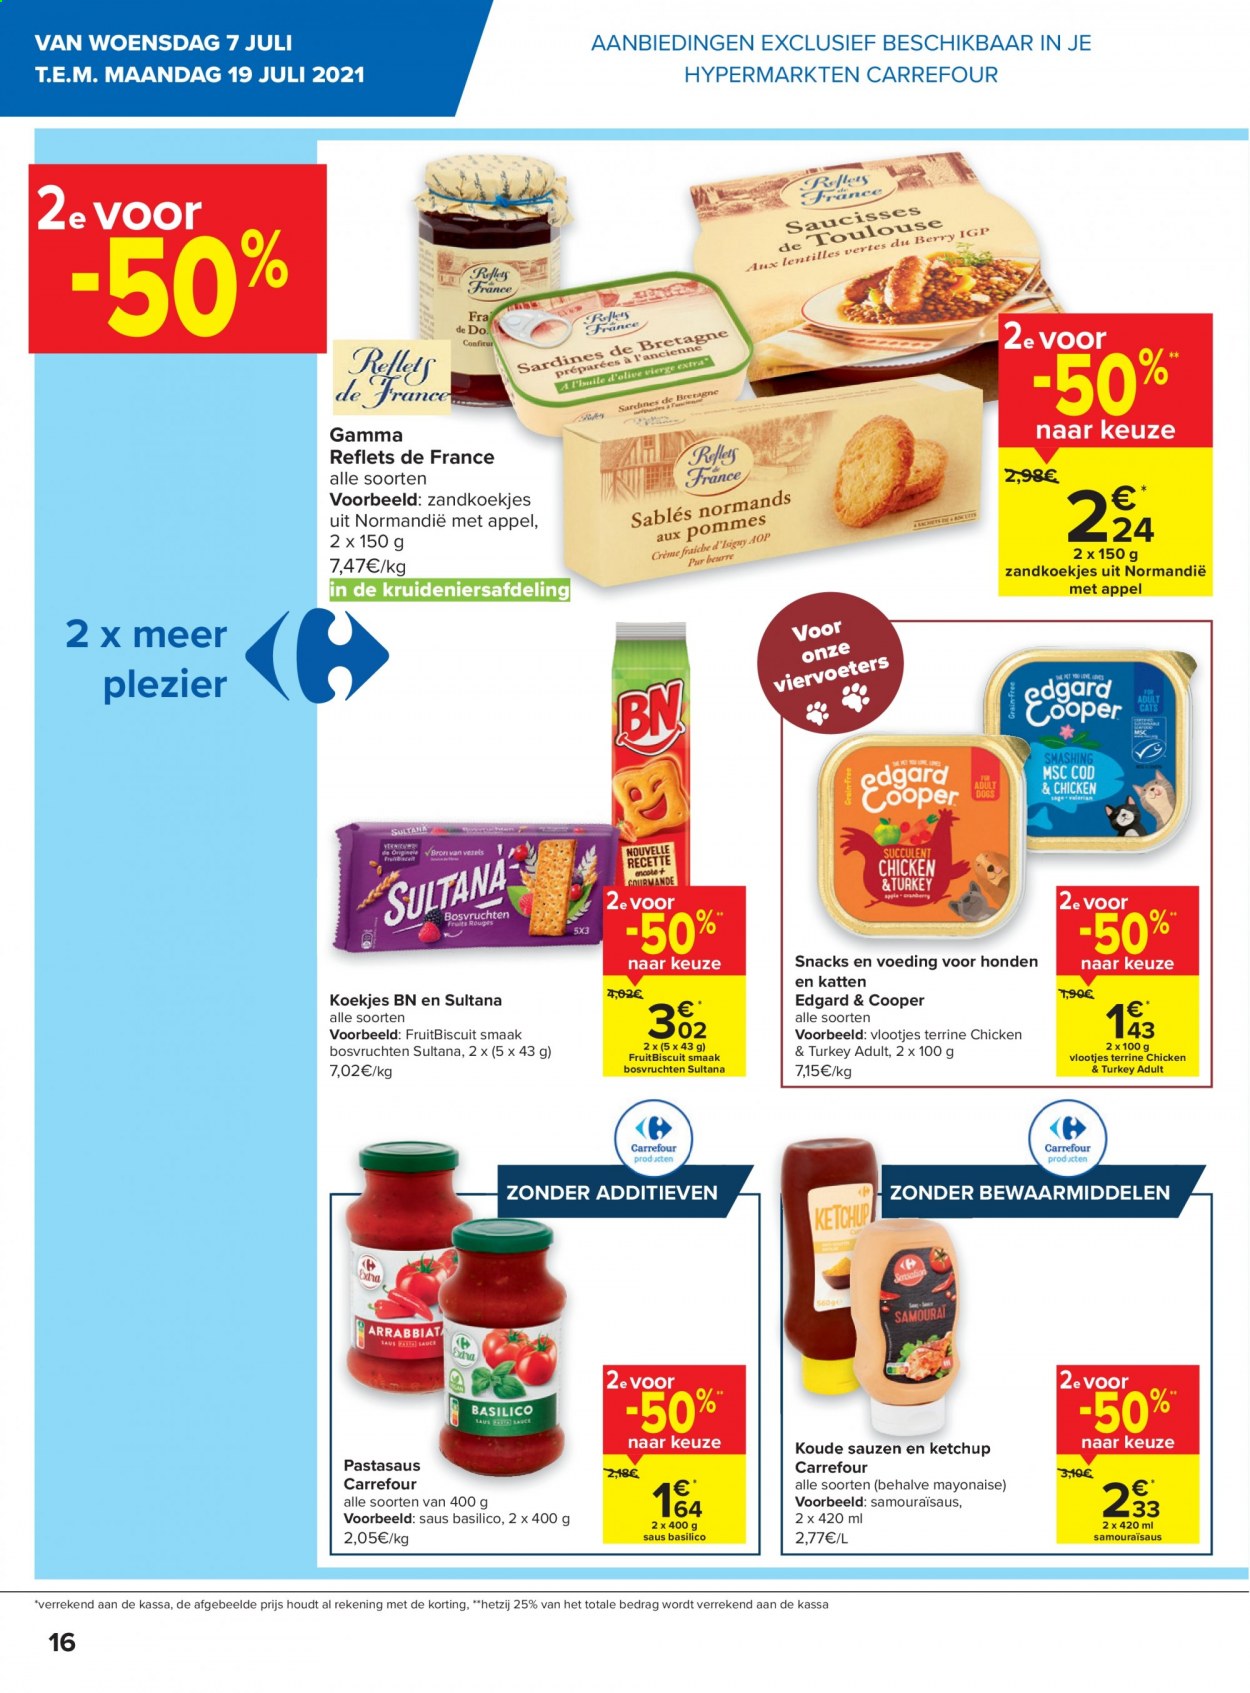 thumbnail - Carrefour hypermarkt-aanbieding - 07/07/2021 - 19/07/2021 -  producten in de aanbieding - appels, koekjes, mayonaise, Gamma. Pagina 16.